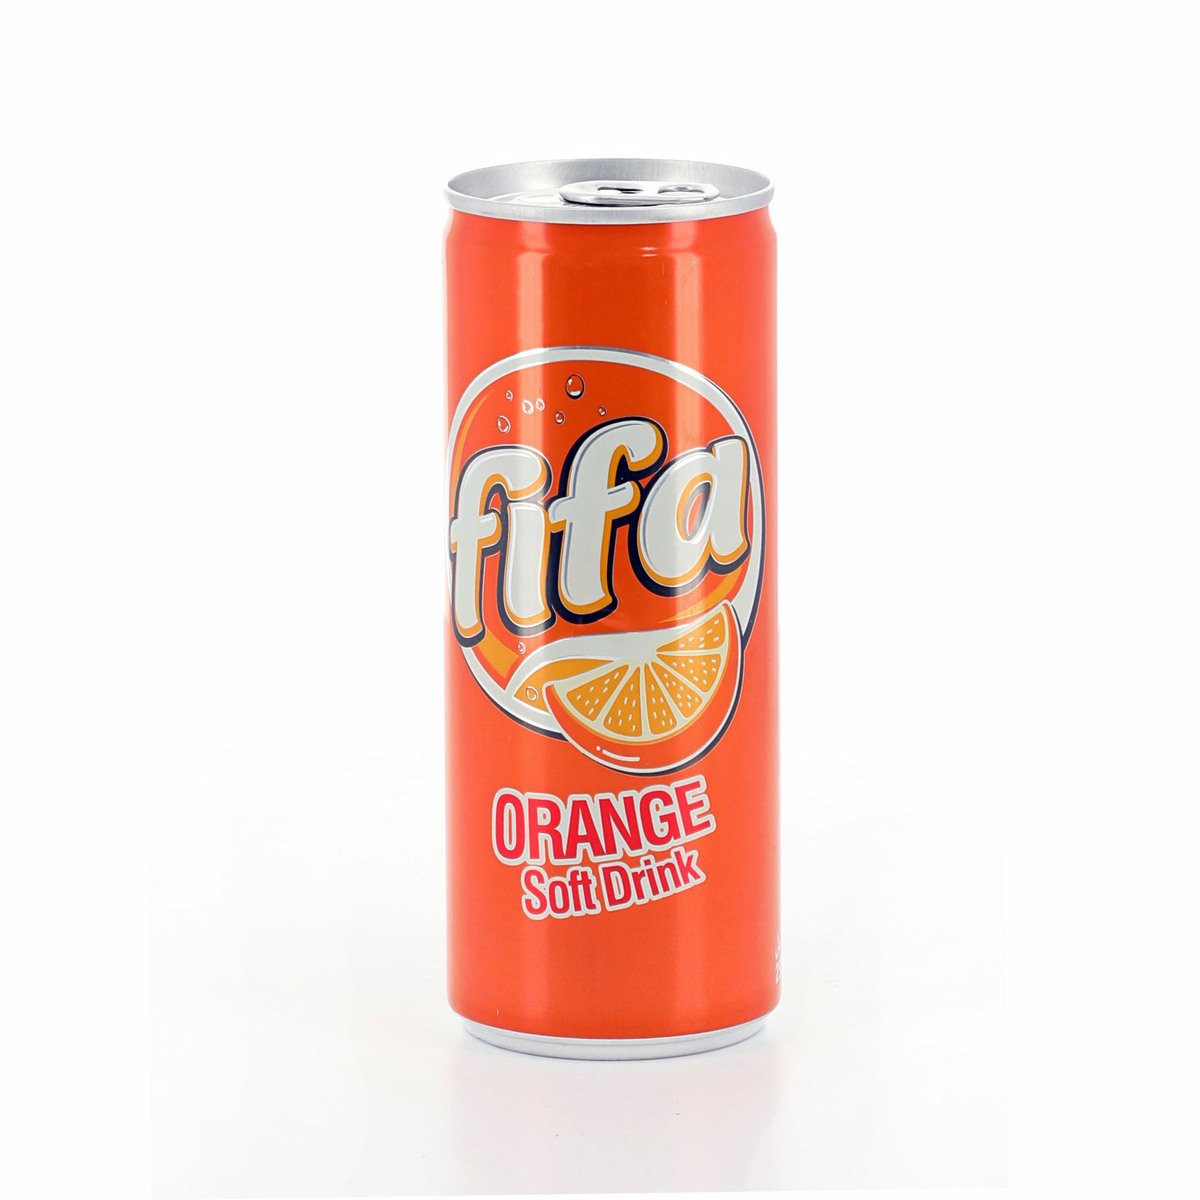 Fifa Orange Soft Drink 30 x 250 ml